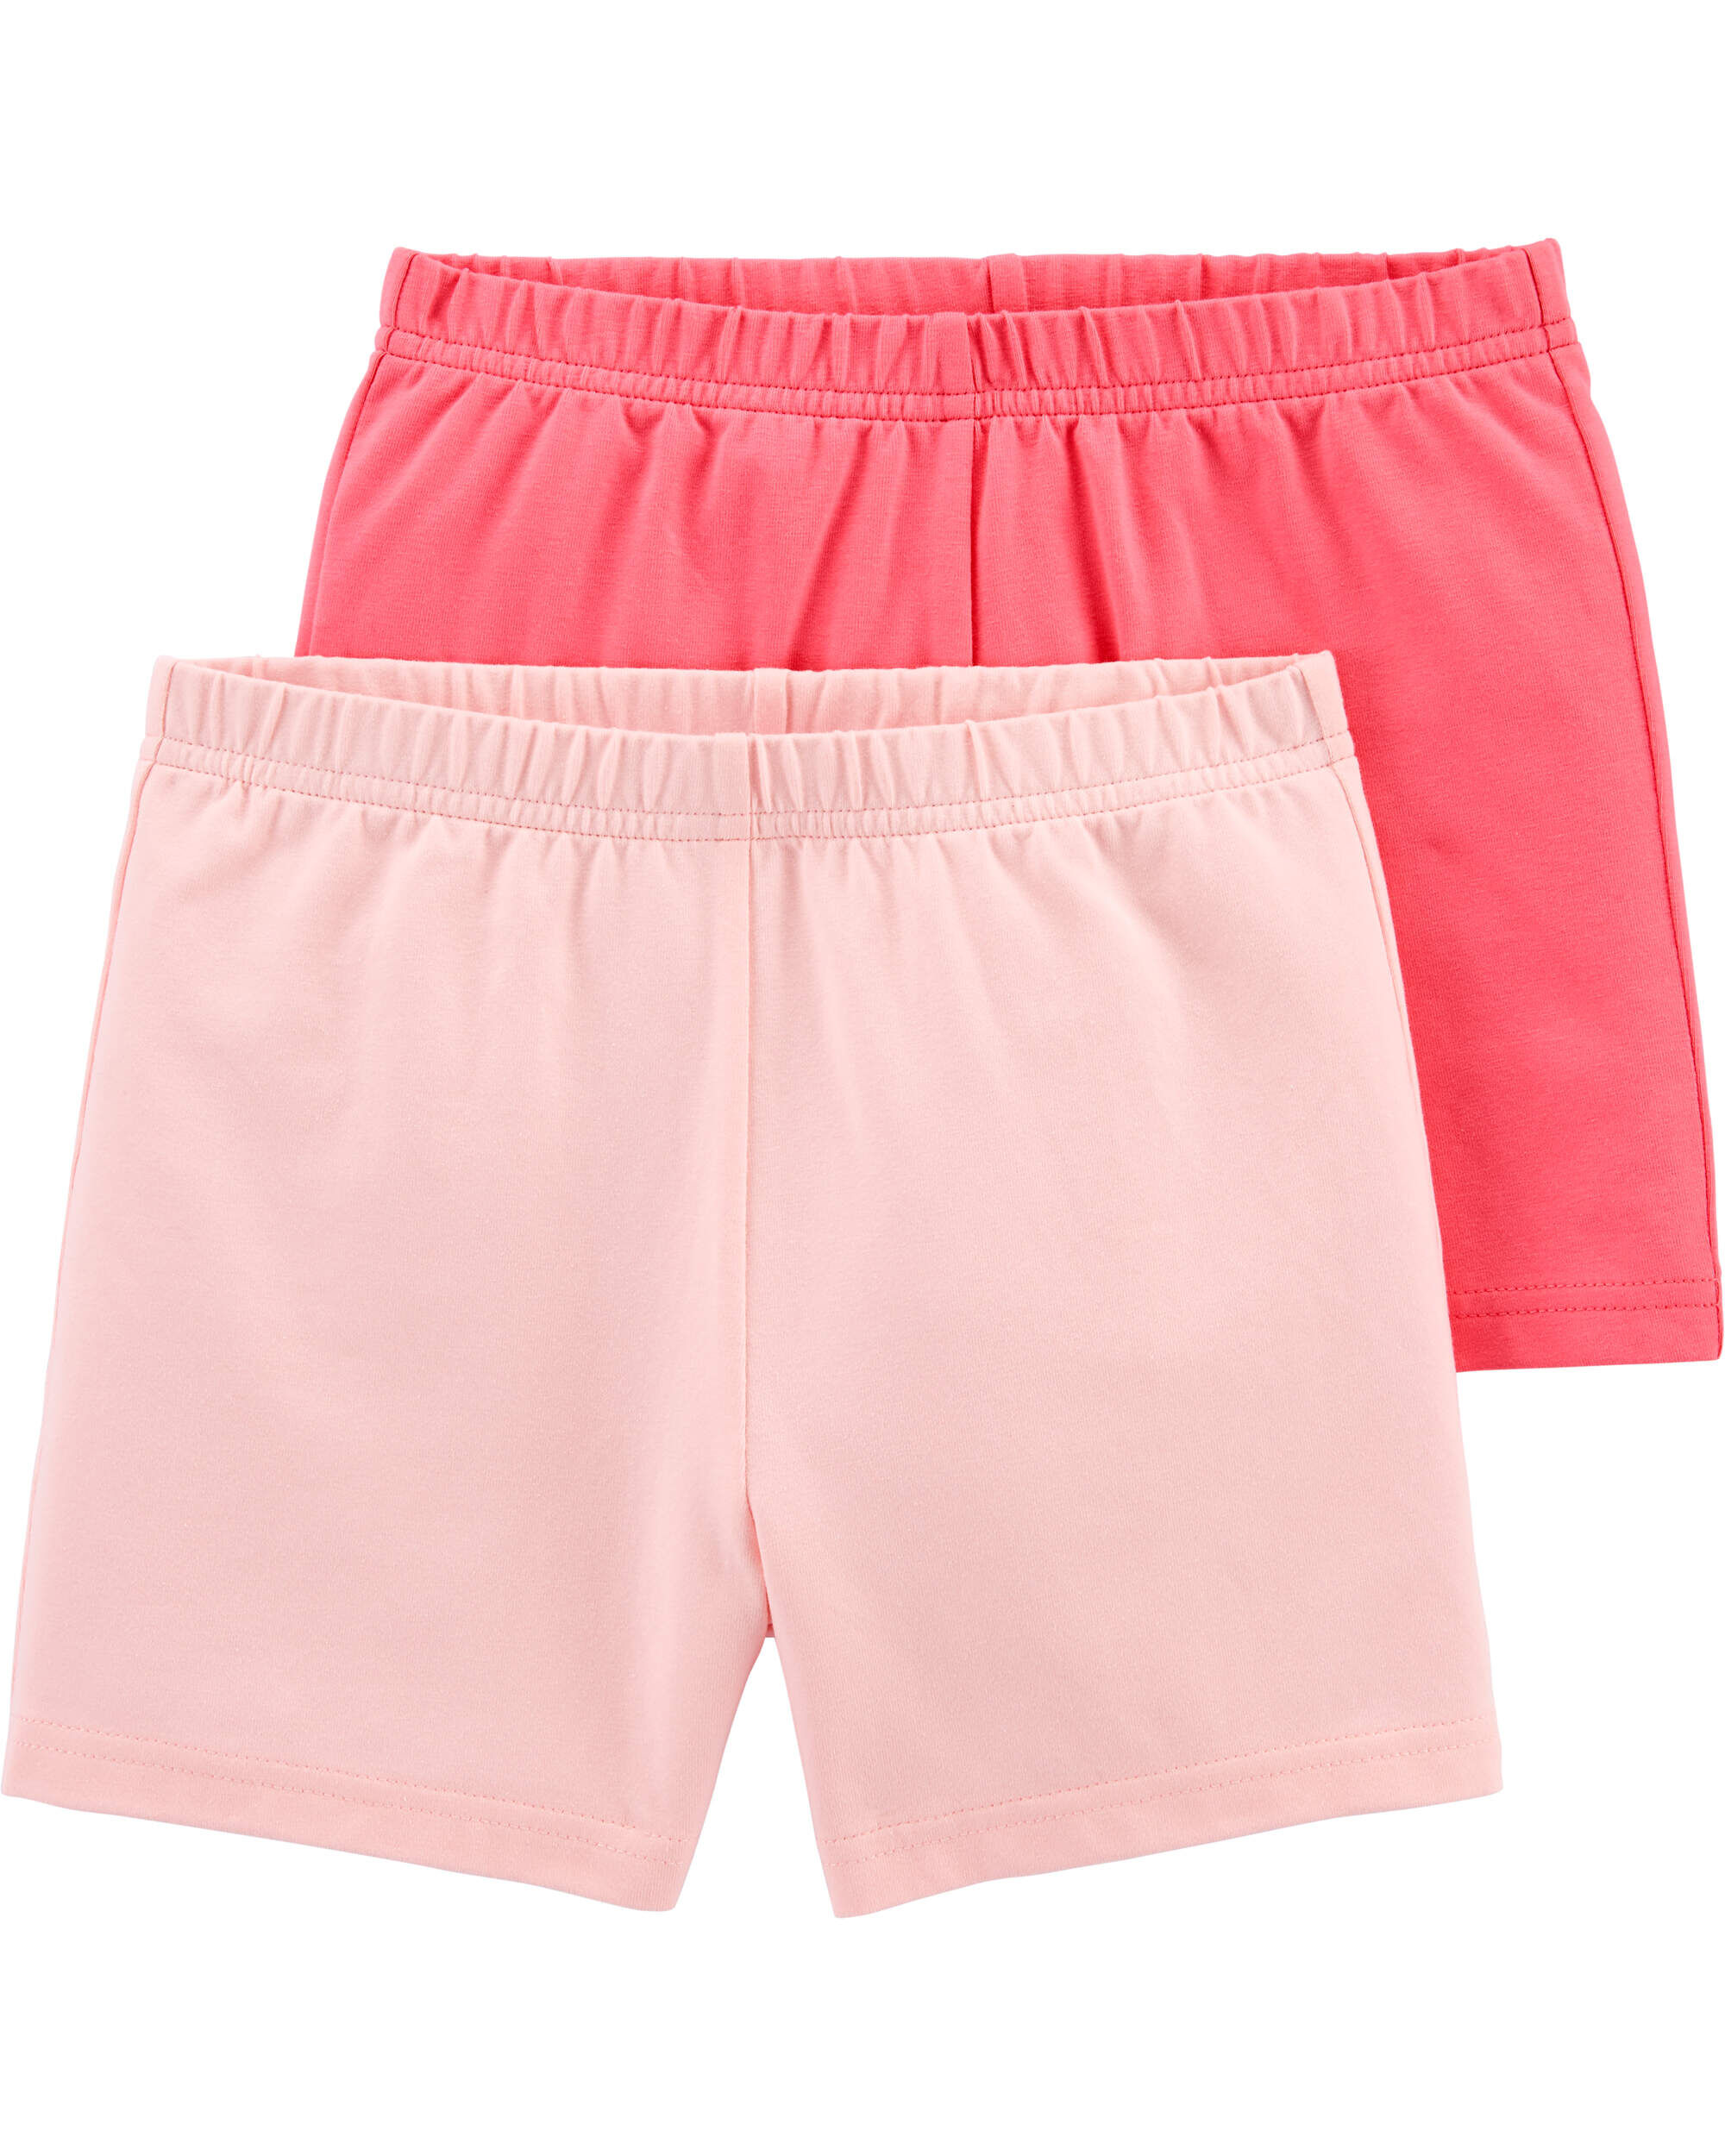 7 CARTERS pink shorts *NWT* Girls sz 